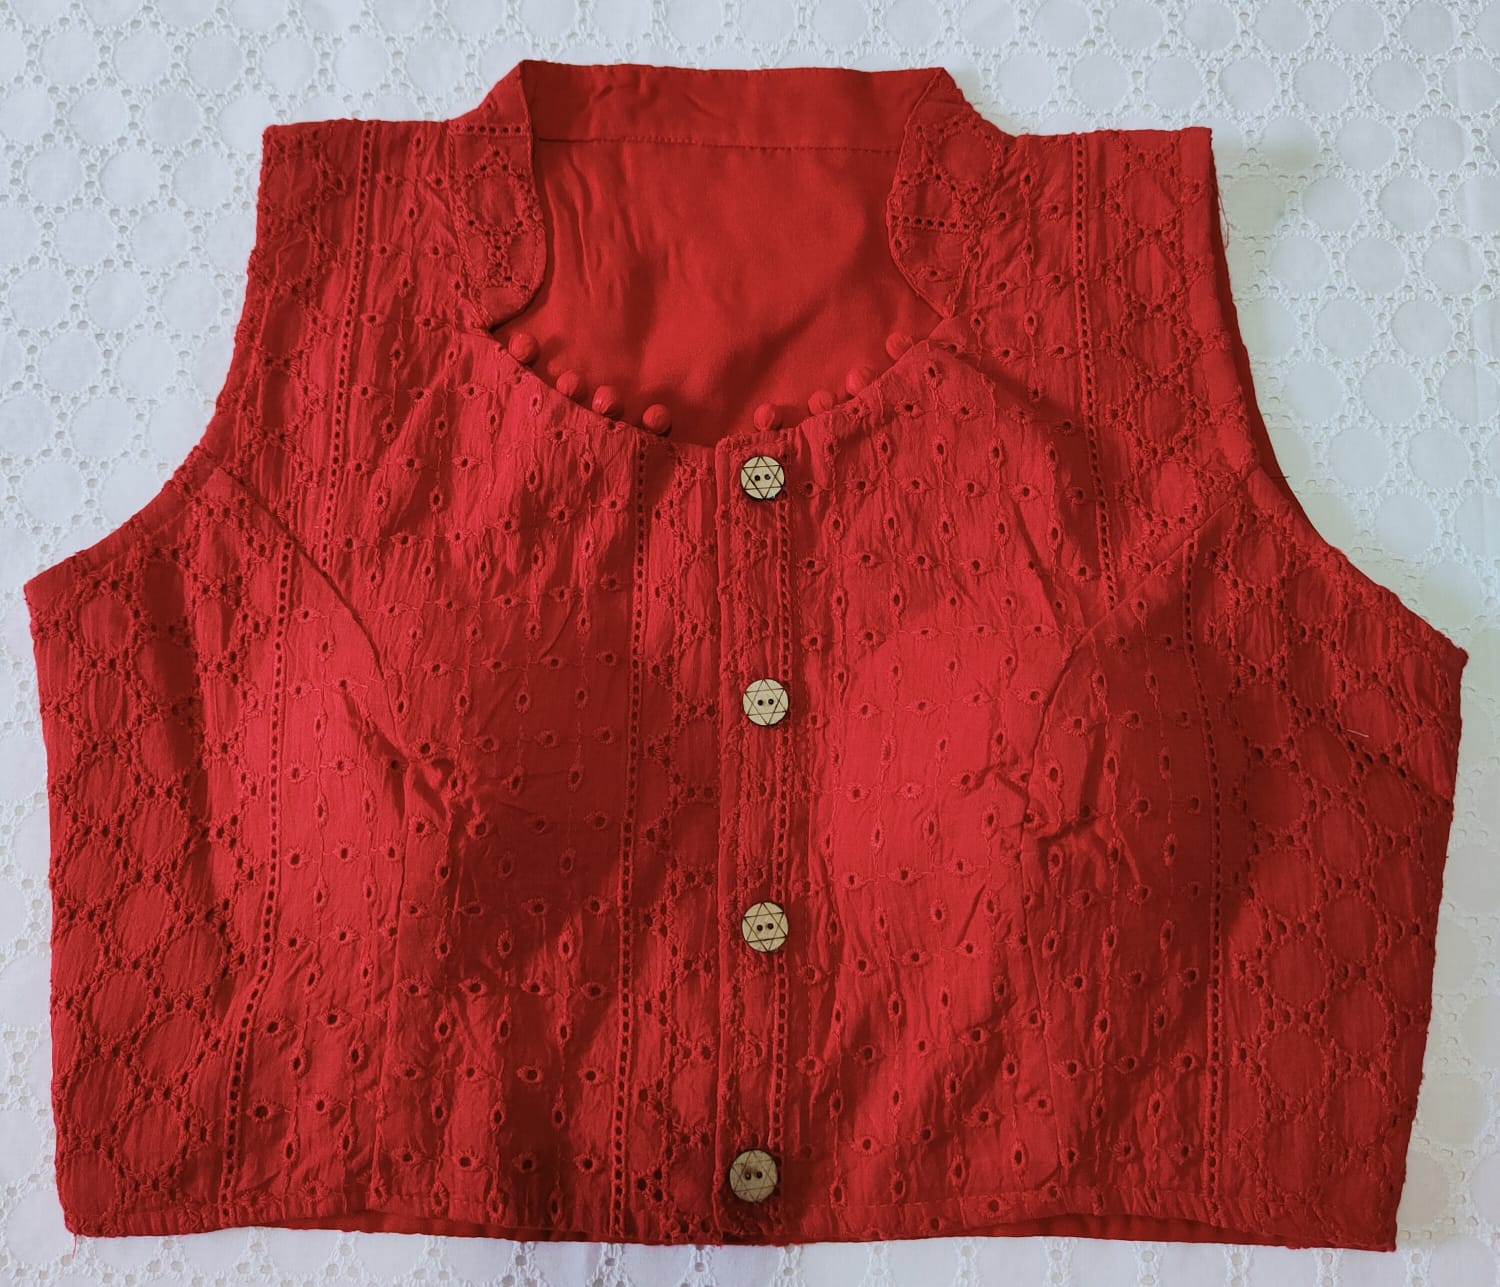 19 Jackets ideas | sewing dresses, blouse designs, blouse design models